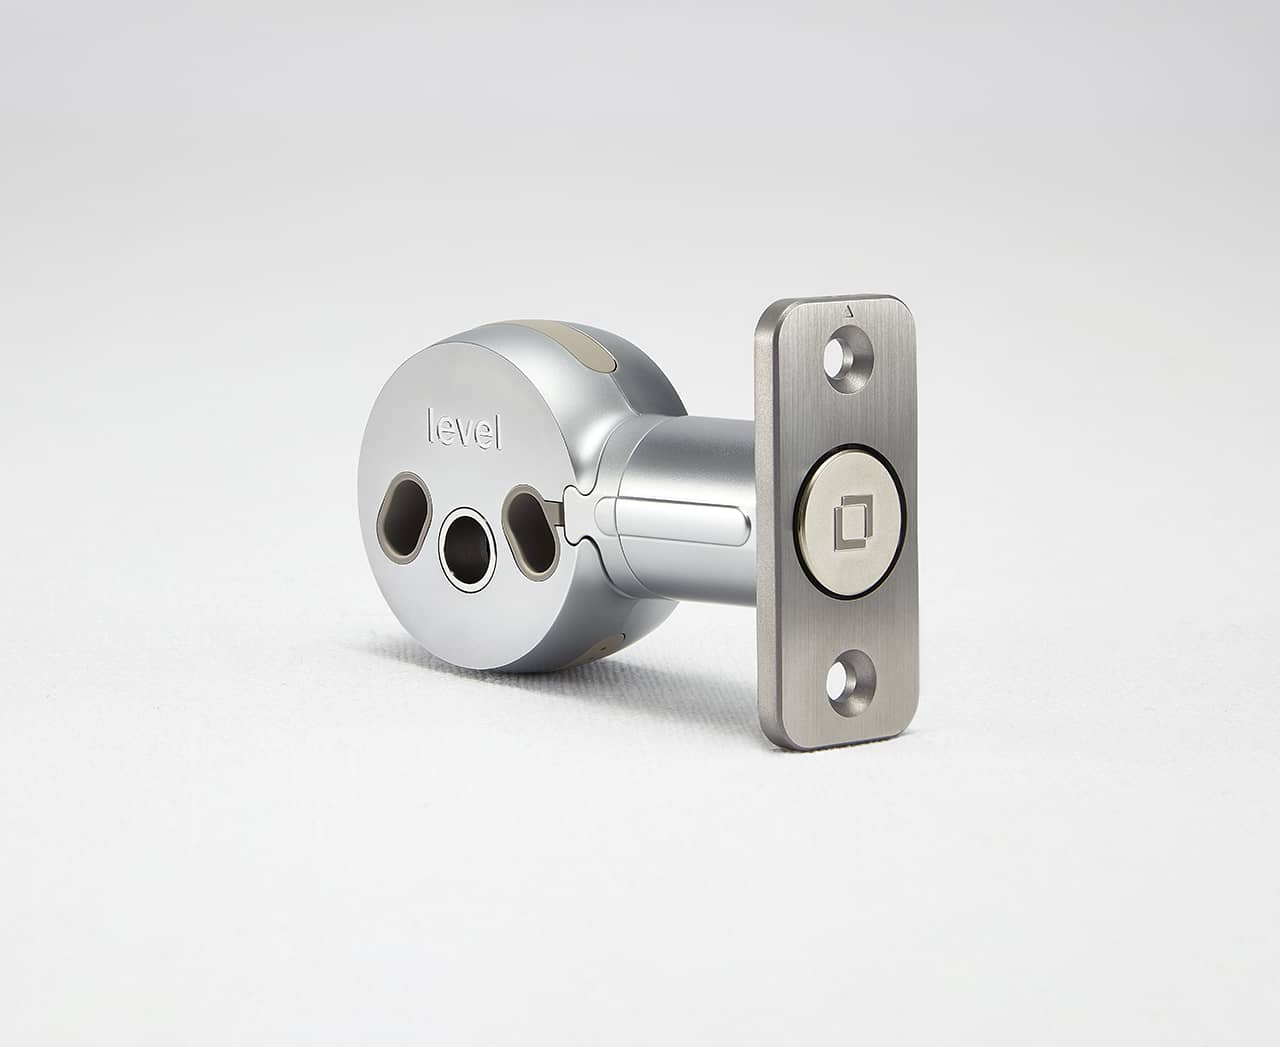 Smart Lock Catalog, Unmatched Design & Security